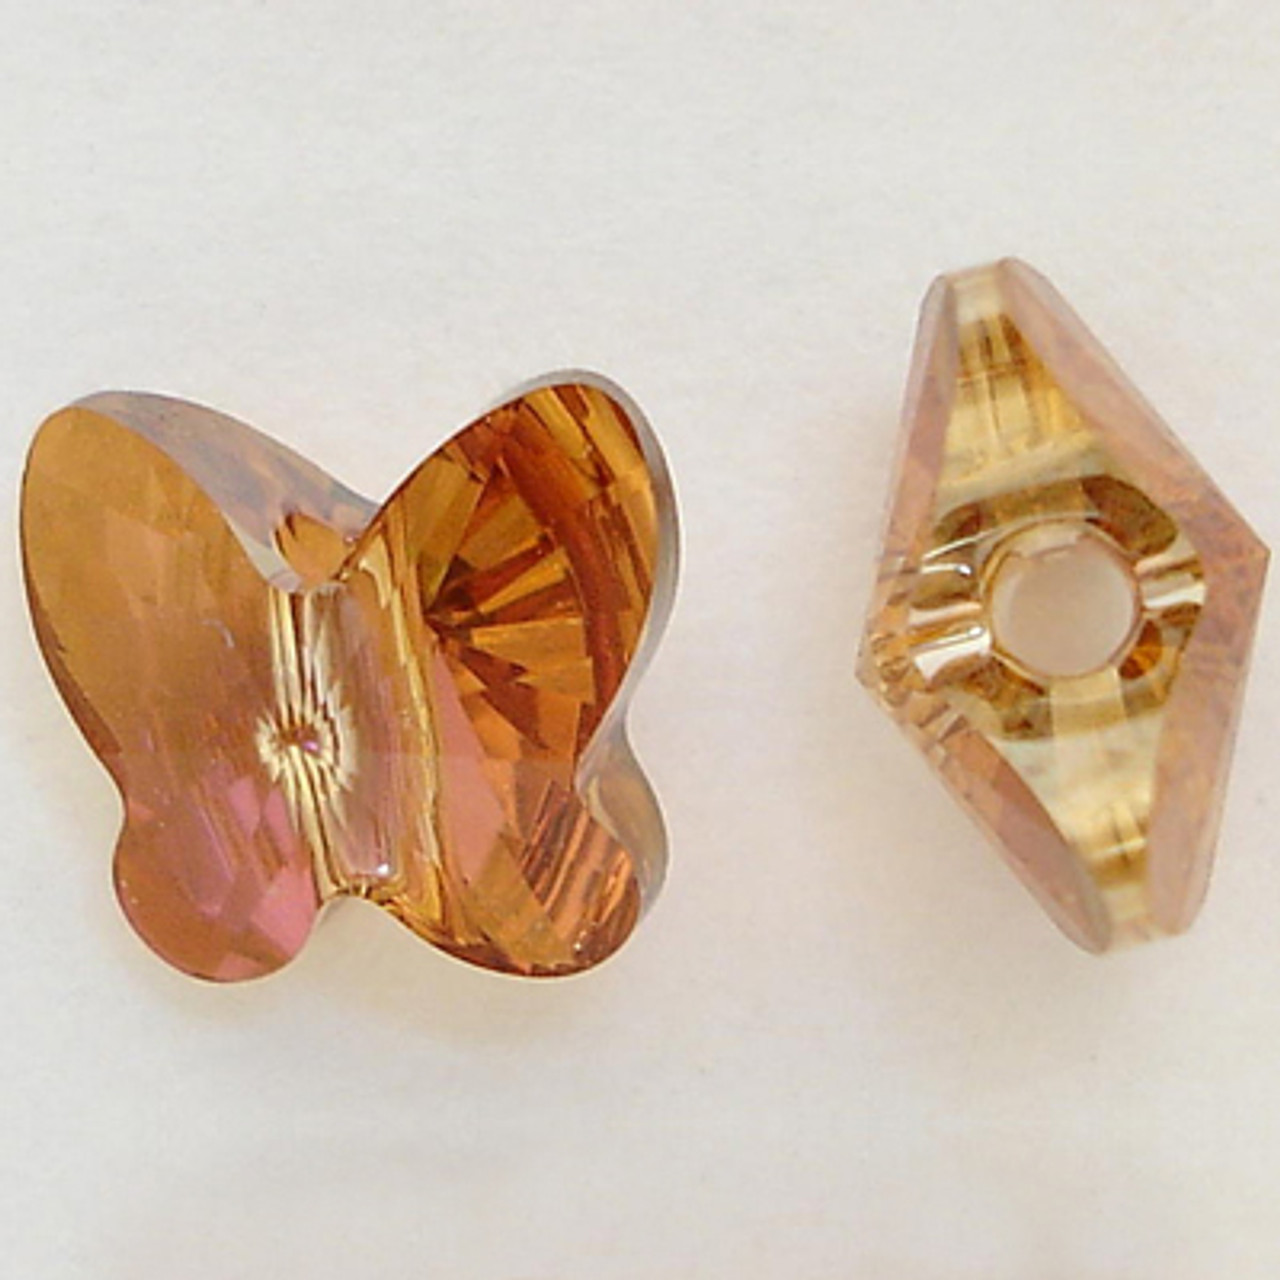 6mm Swarovski Crystal 5754 Butterfly Beads